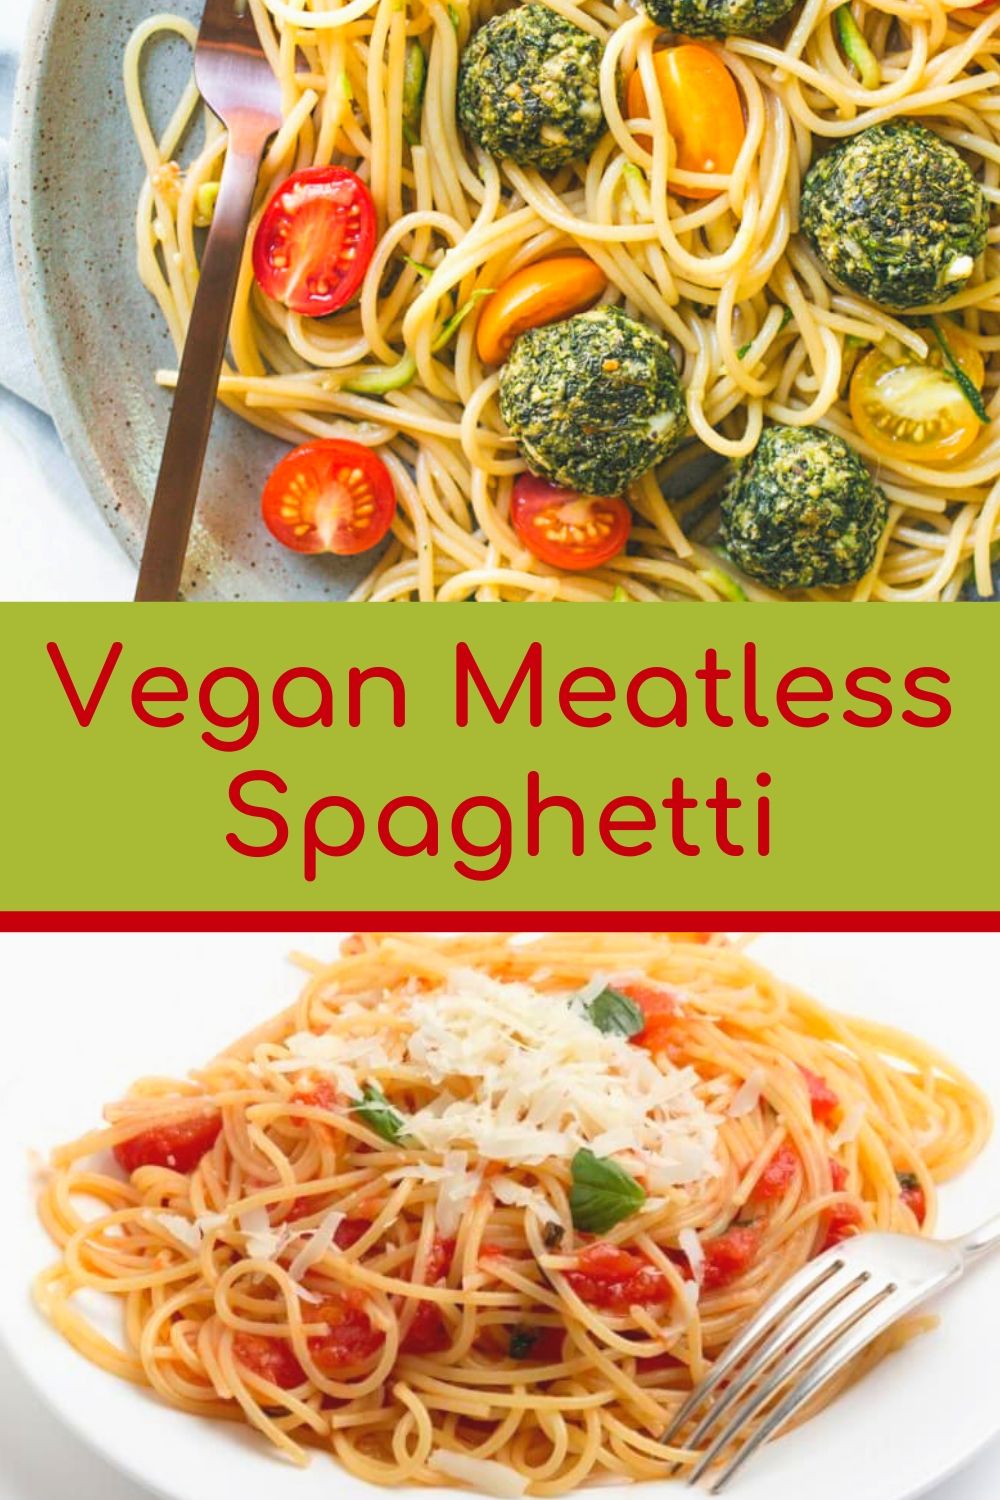 Vegan Meatless Spaghetti | New Recipe 4